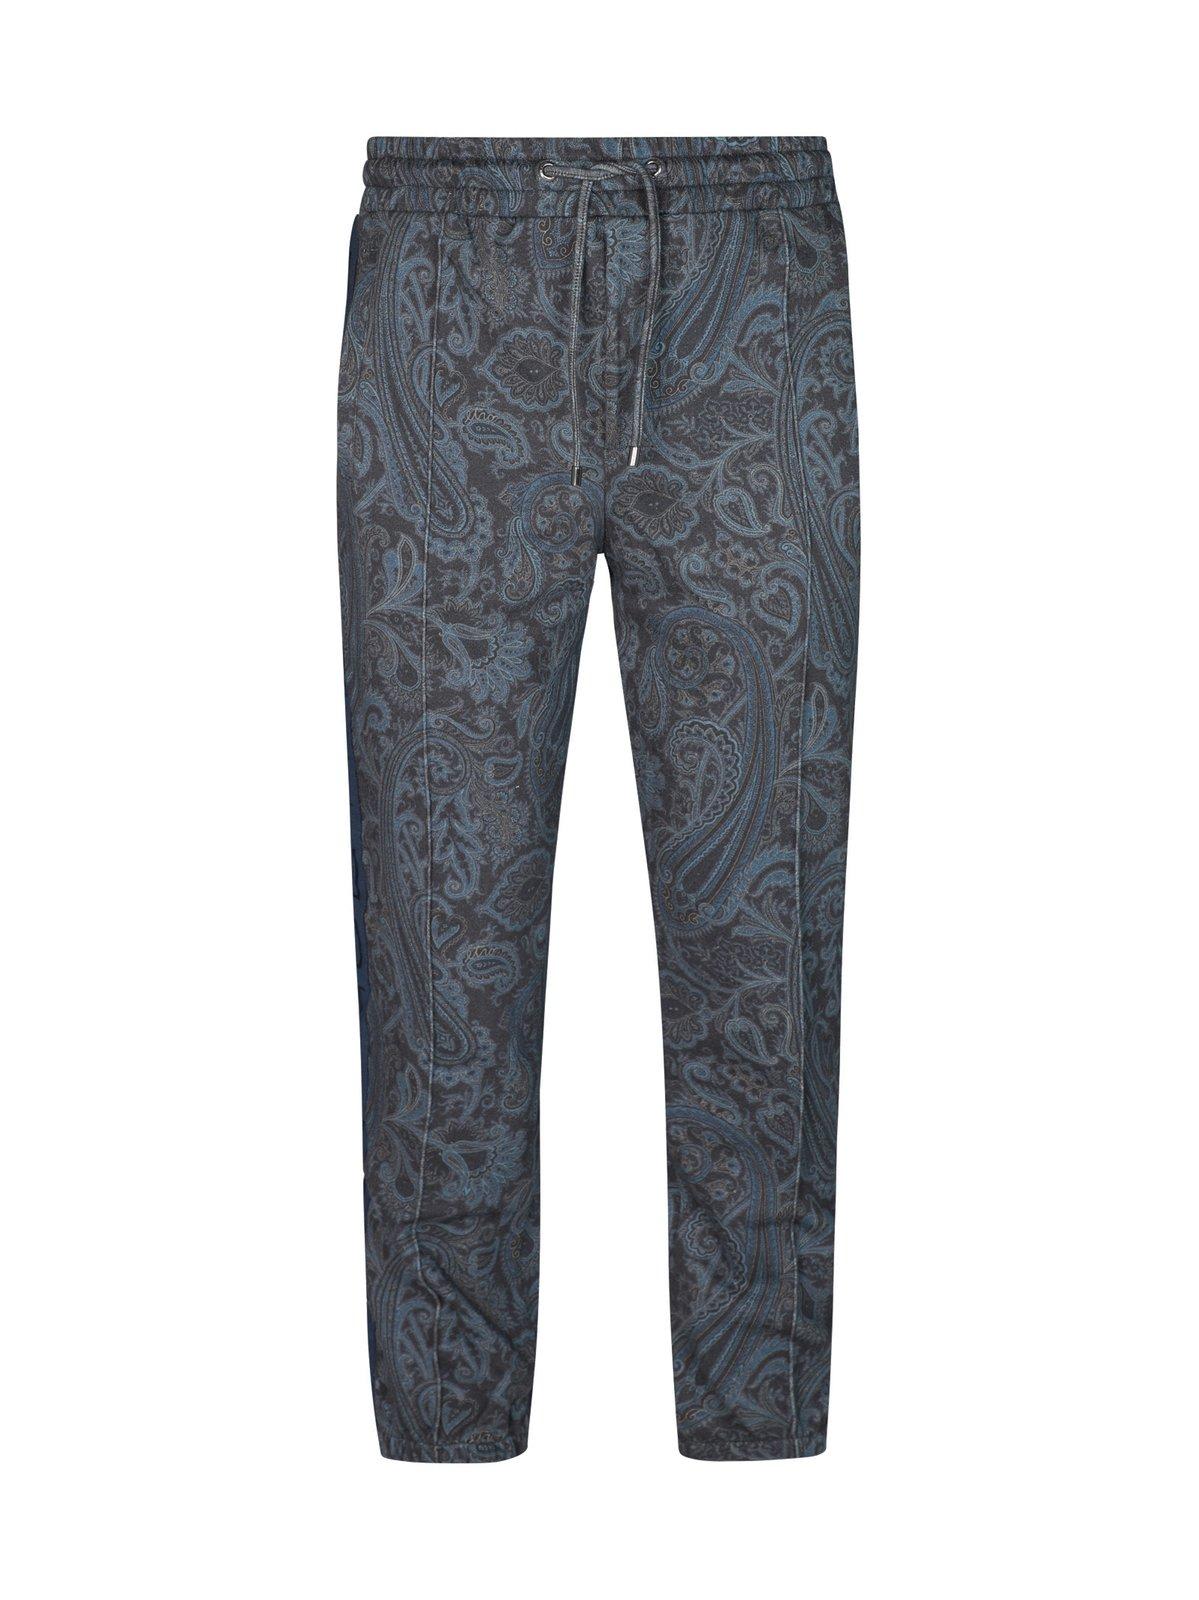 Etro Paisley Printed Drawstring Pants